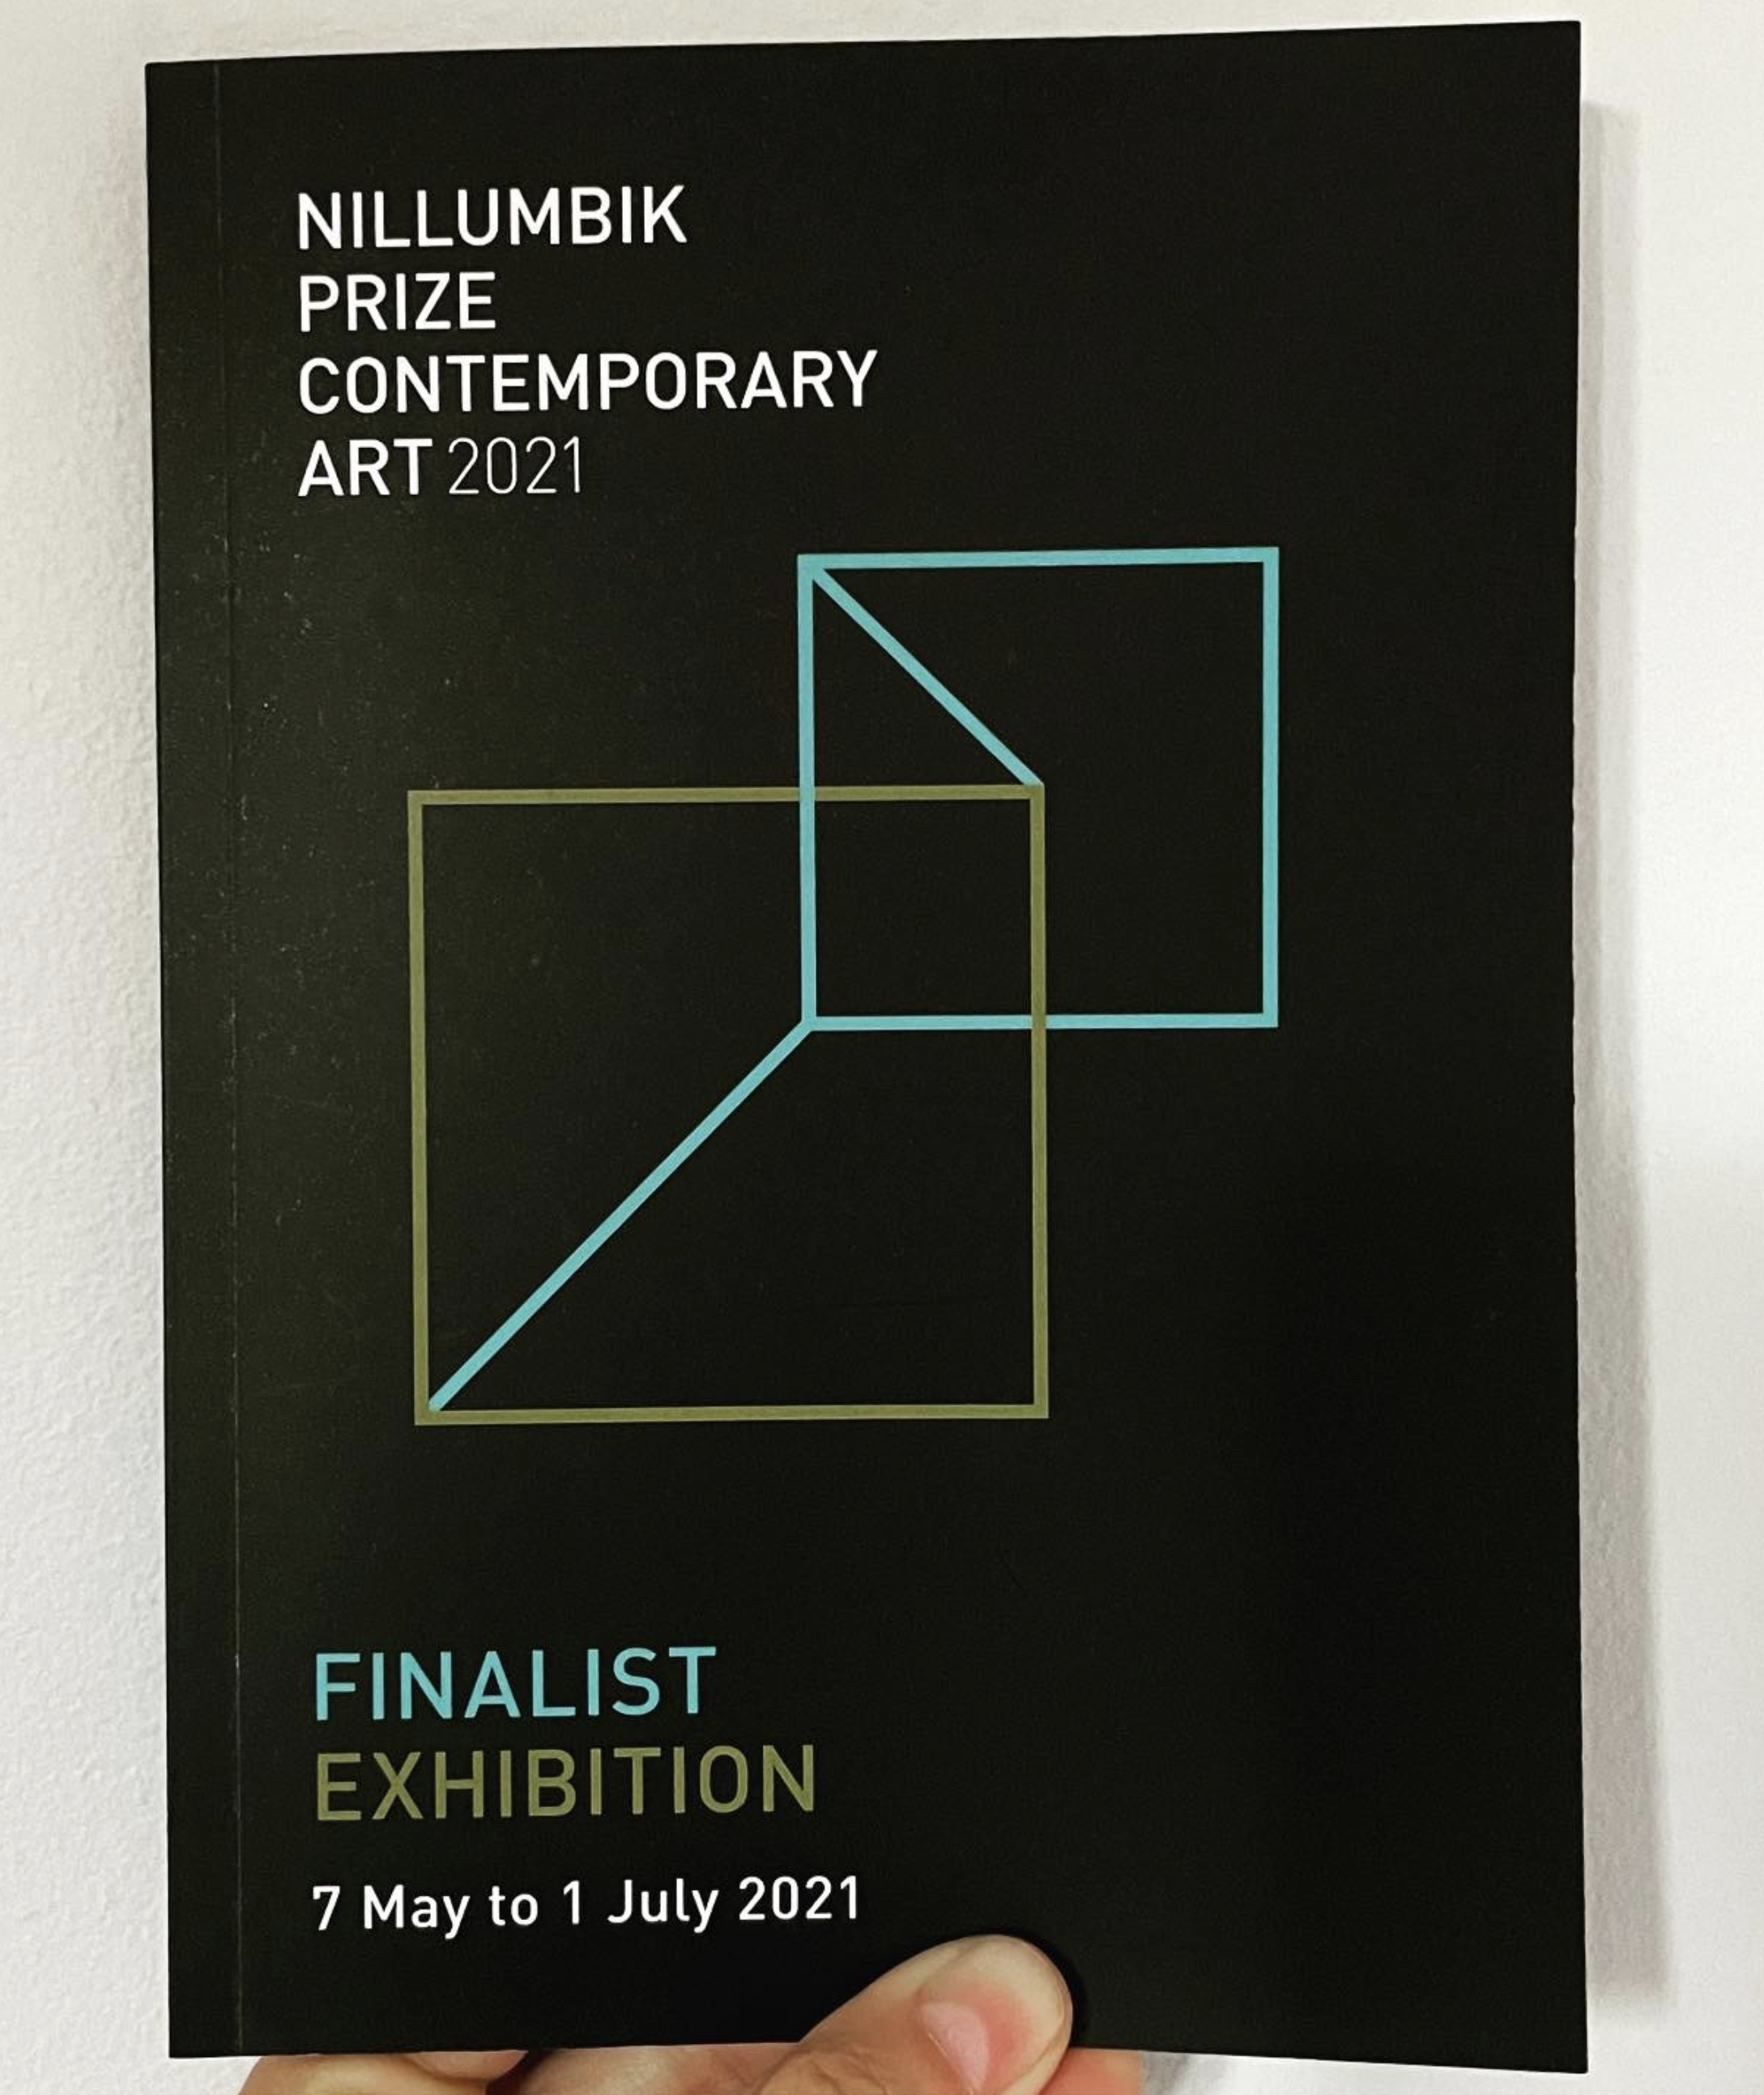 The Nillumbik Prize for Contemporary Art